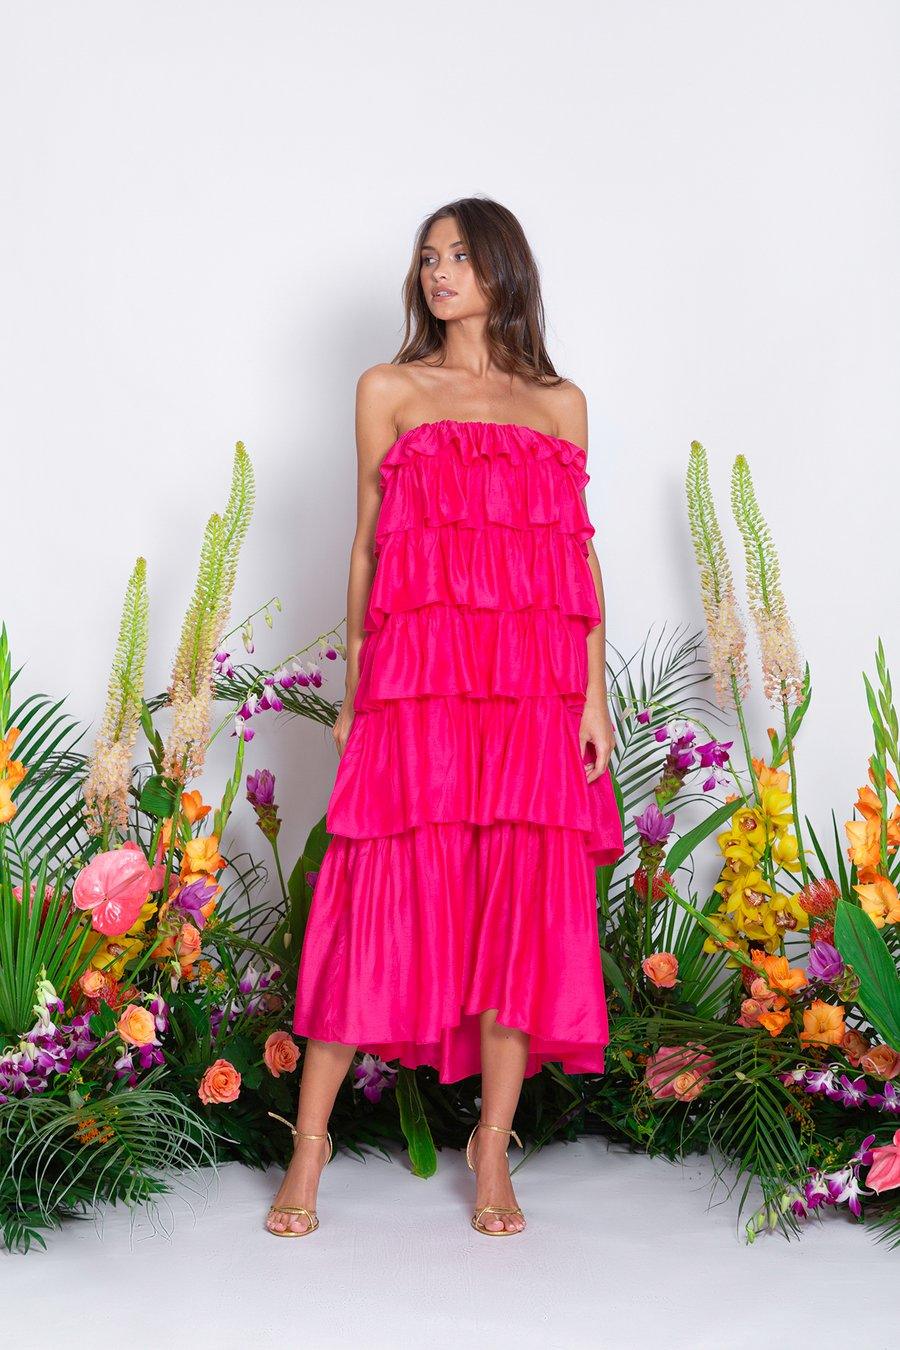 Sundress - Gigi Cotton/Silk Layered Dress in Fuchsia (2 in 1) - OutDazl